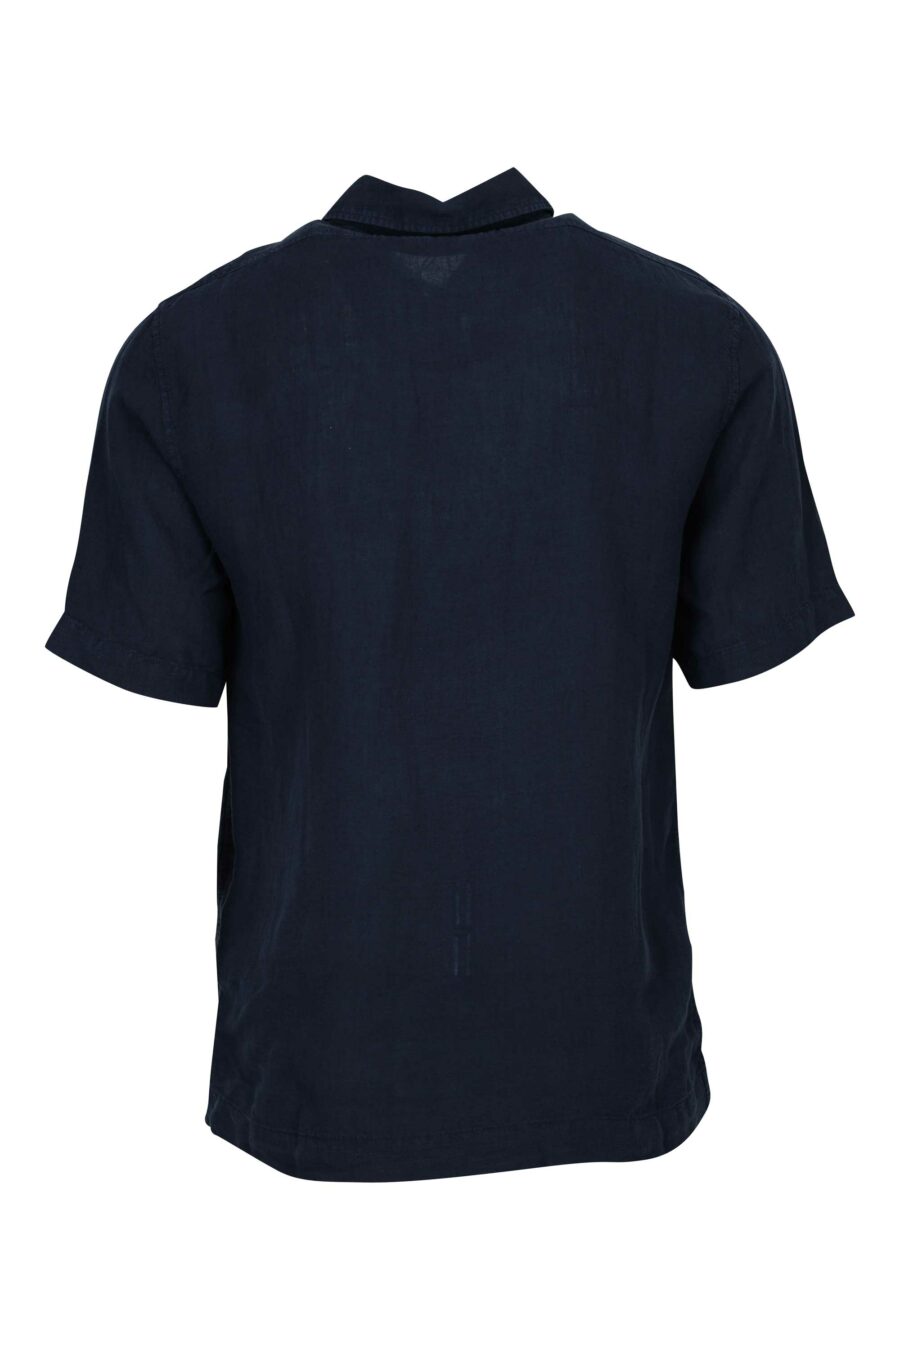 Camisa manga corta azul oscuro con botones y bolsillos con minilogo - 7620943812053 1